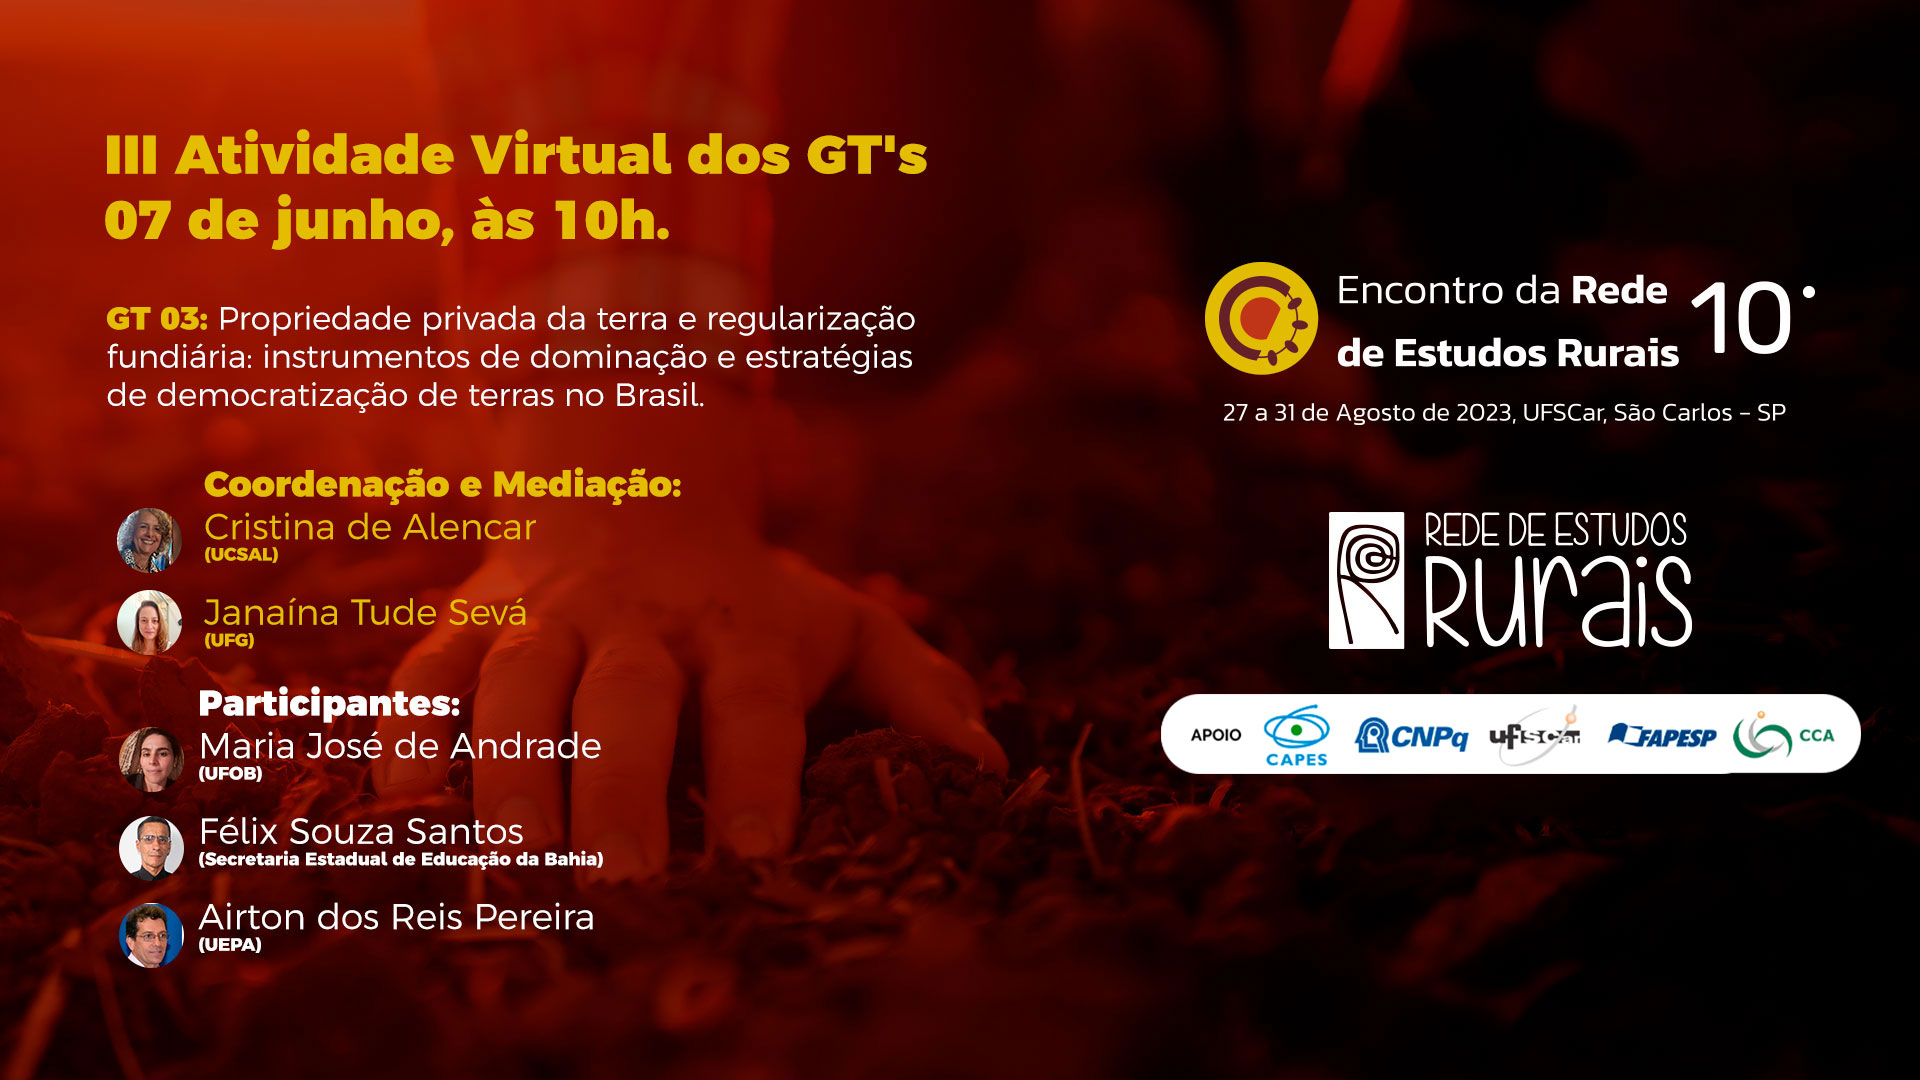 III Atividade Virtual dos GTs - 10º Encontro da Rede de Estudos Rurais 1